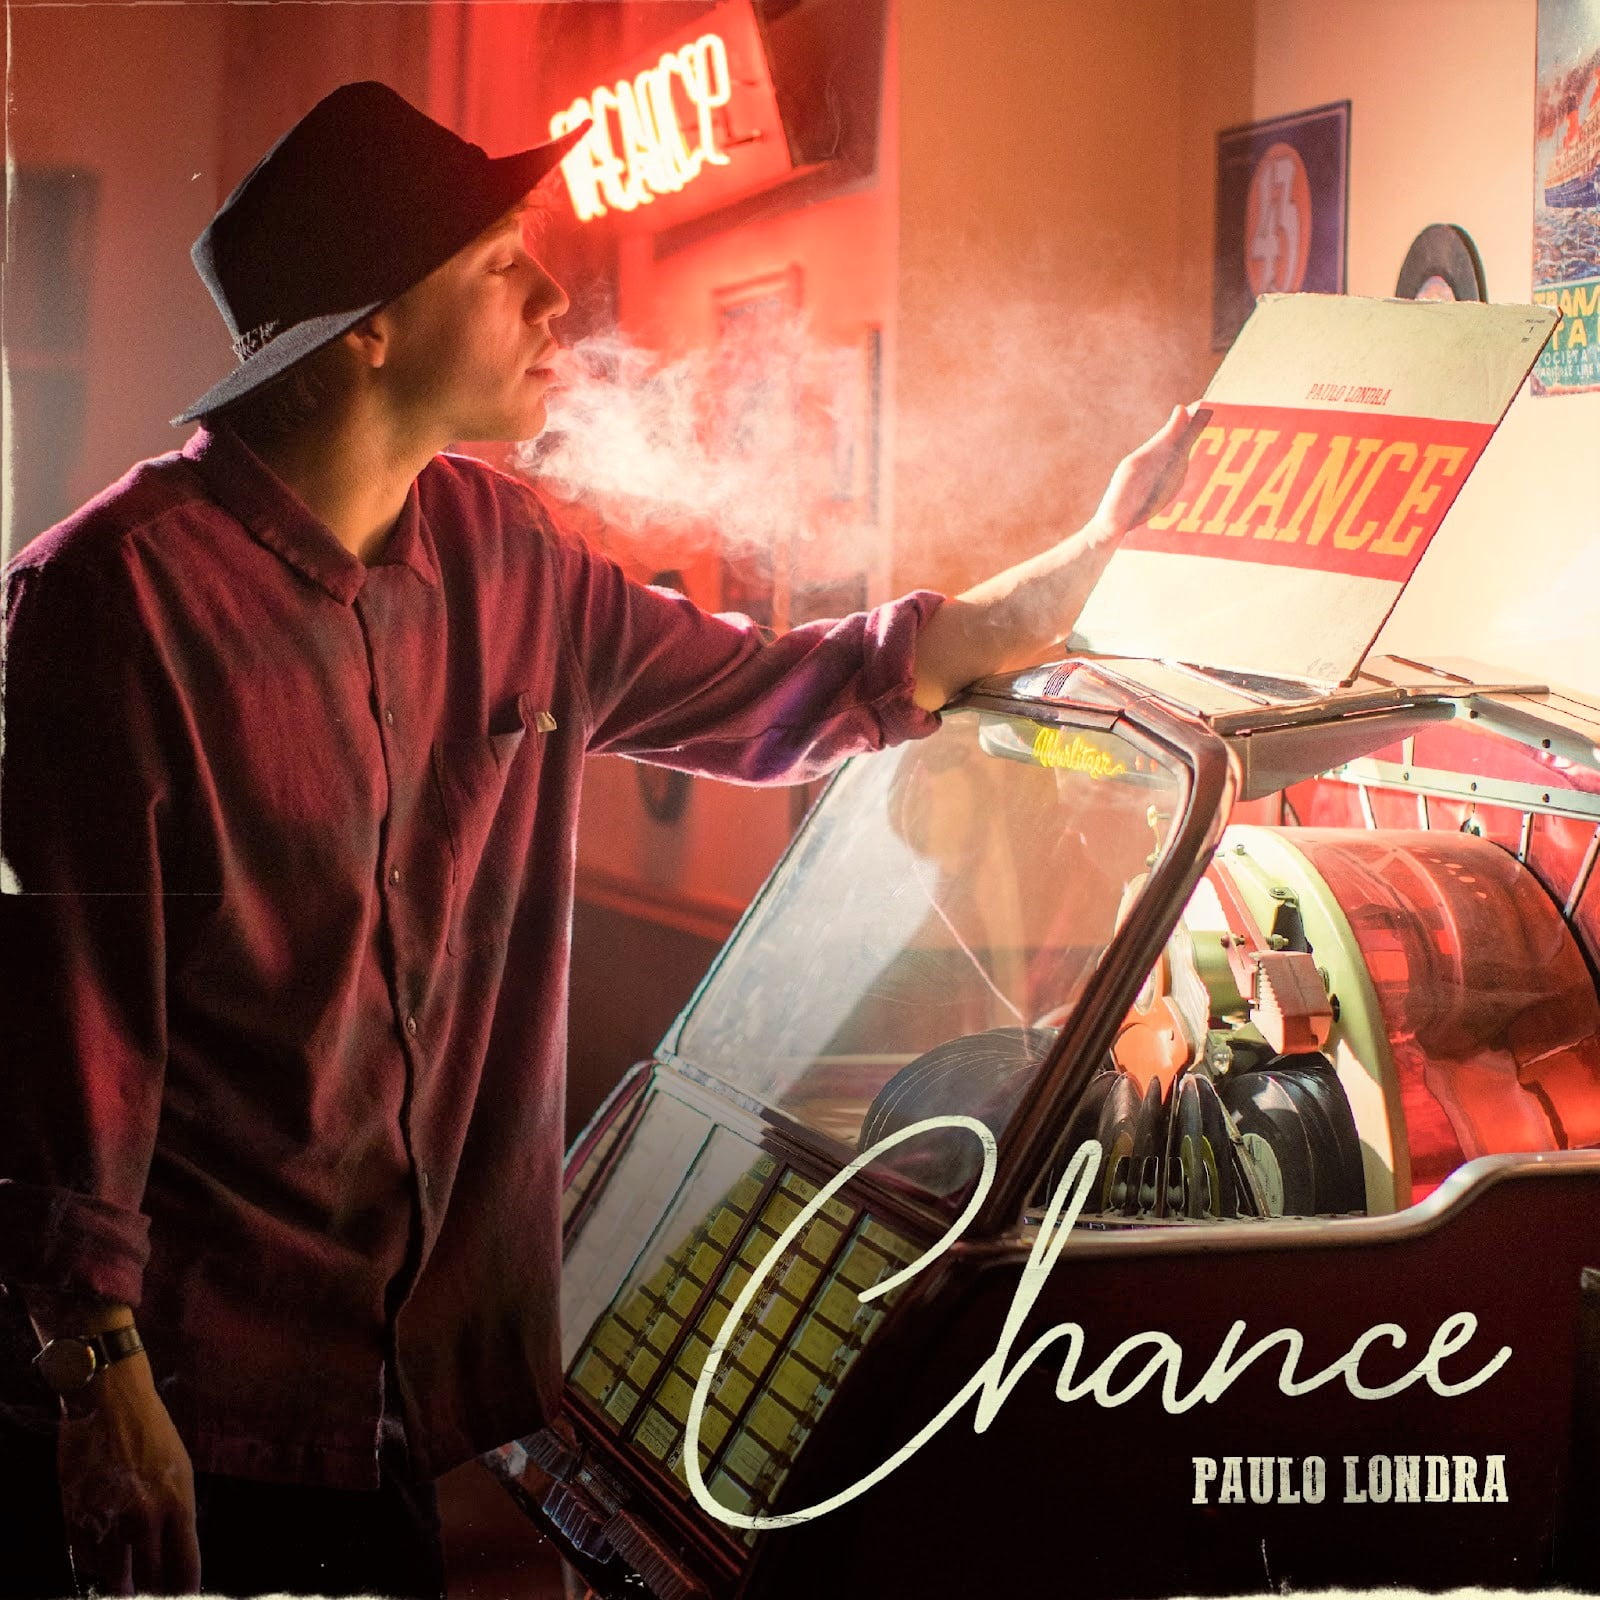 Paulo Londra "Chance" cover via Eugenio Mazzinghi / Courtesy of: Buena Productora/ Warner Music Latina for use by 360 Magazine